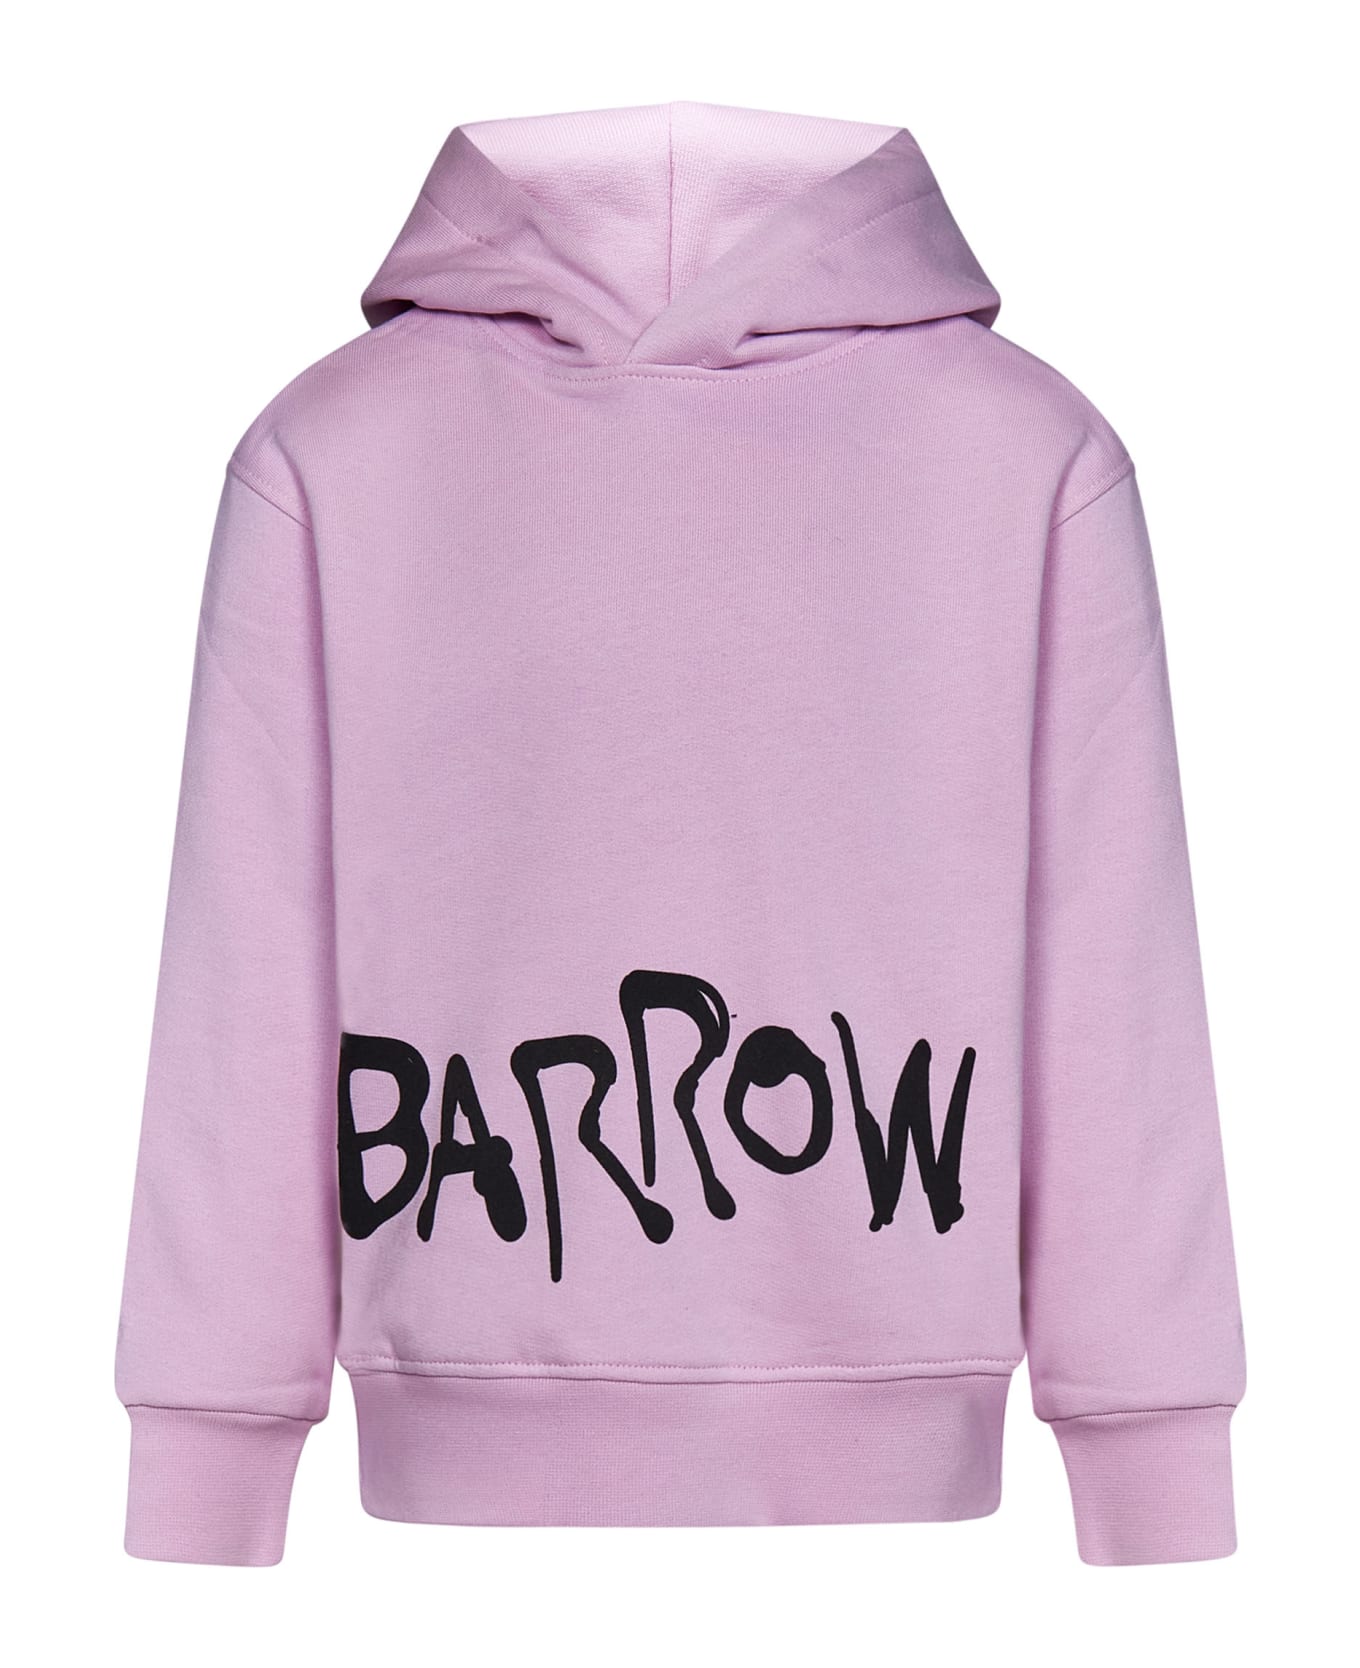 Barrow Sweatshirt - Pink Lavander